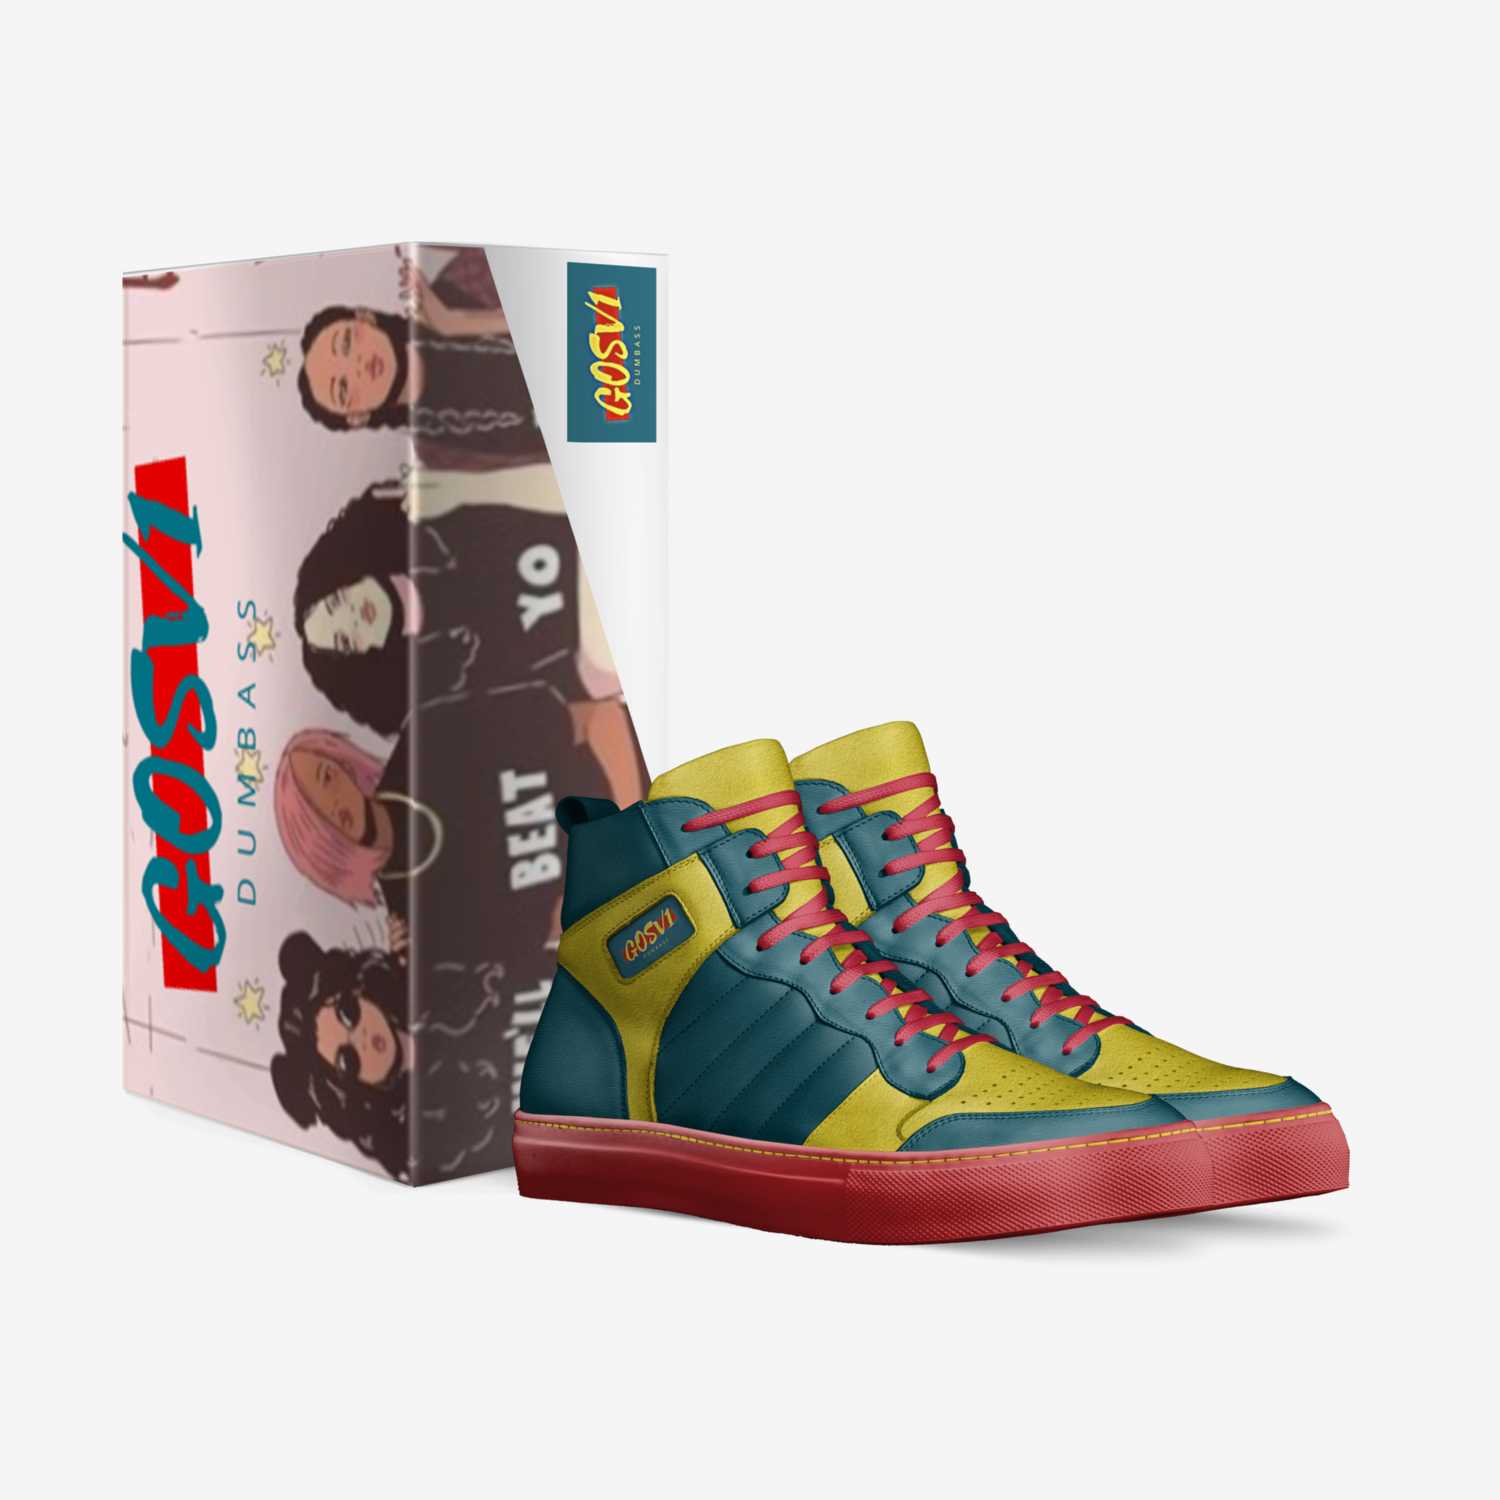 GOS V1 custom made in Italy shoes by Blake Mofoah | Box view